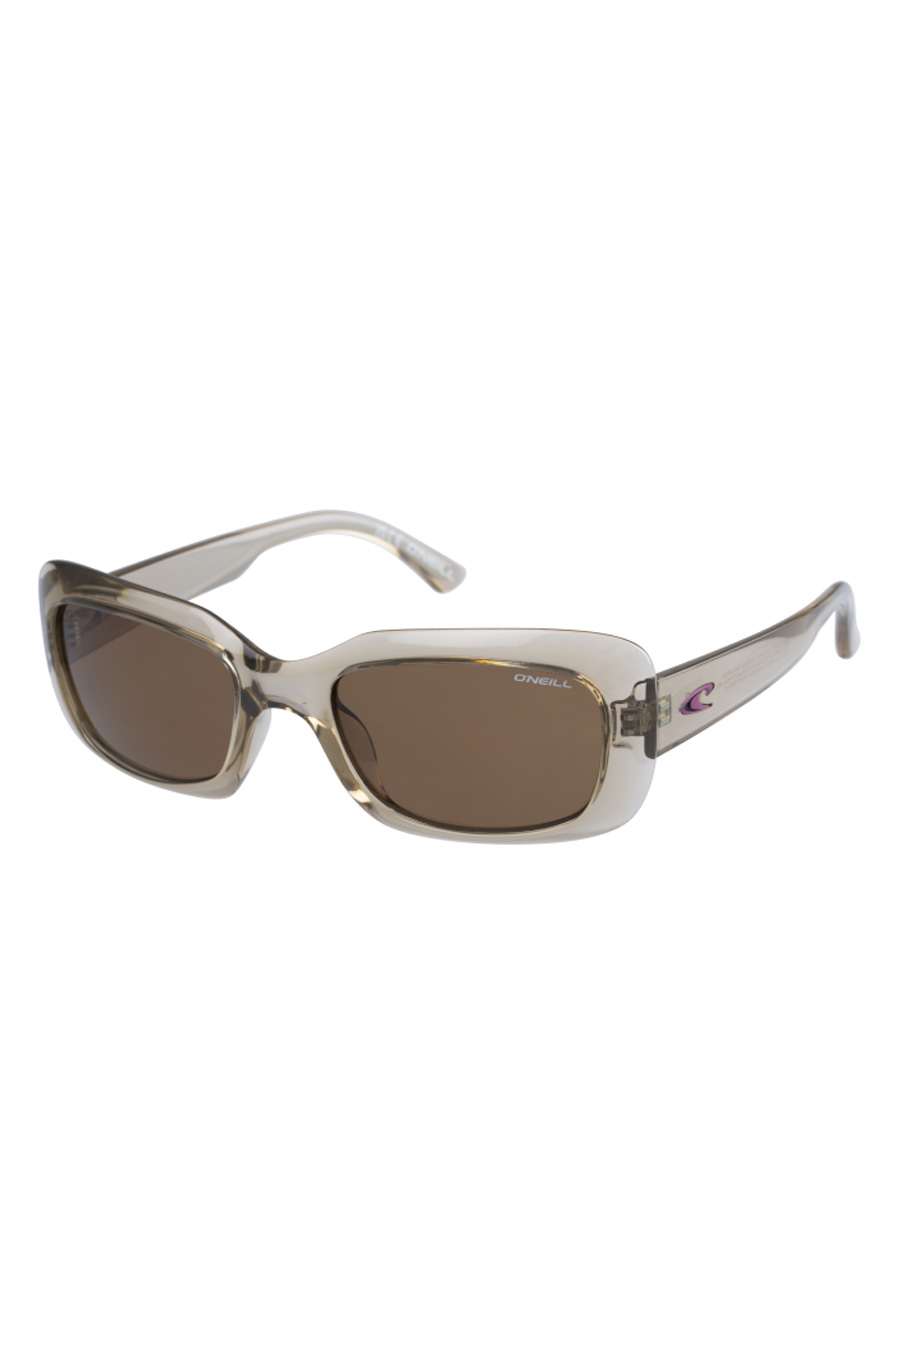 Солнечные очки ONEILL ONS-9012-20-100P